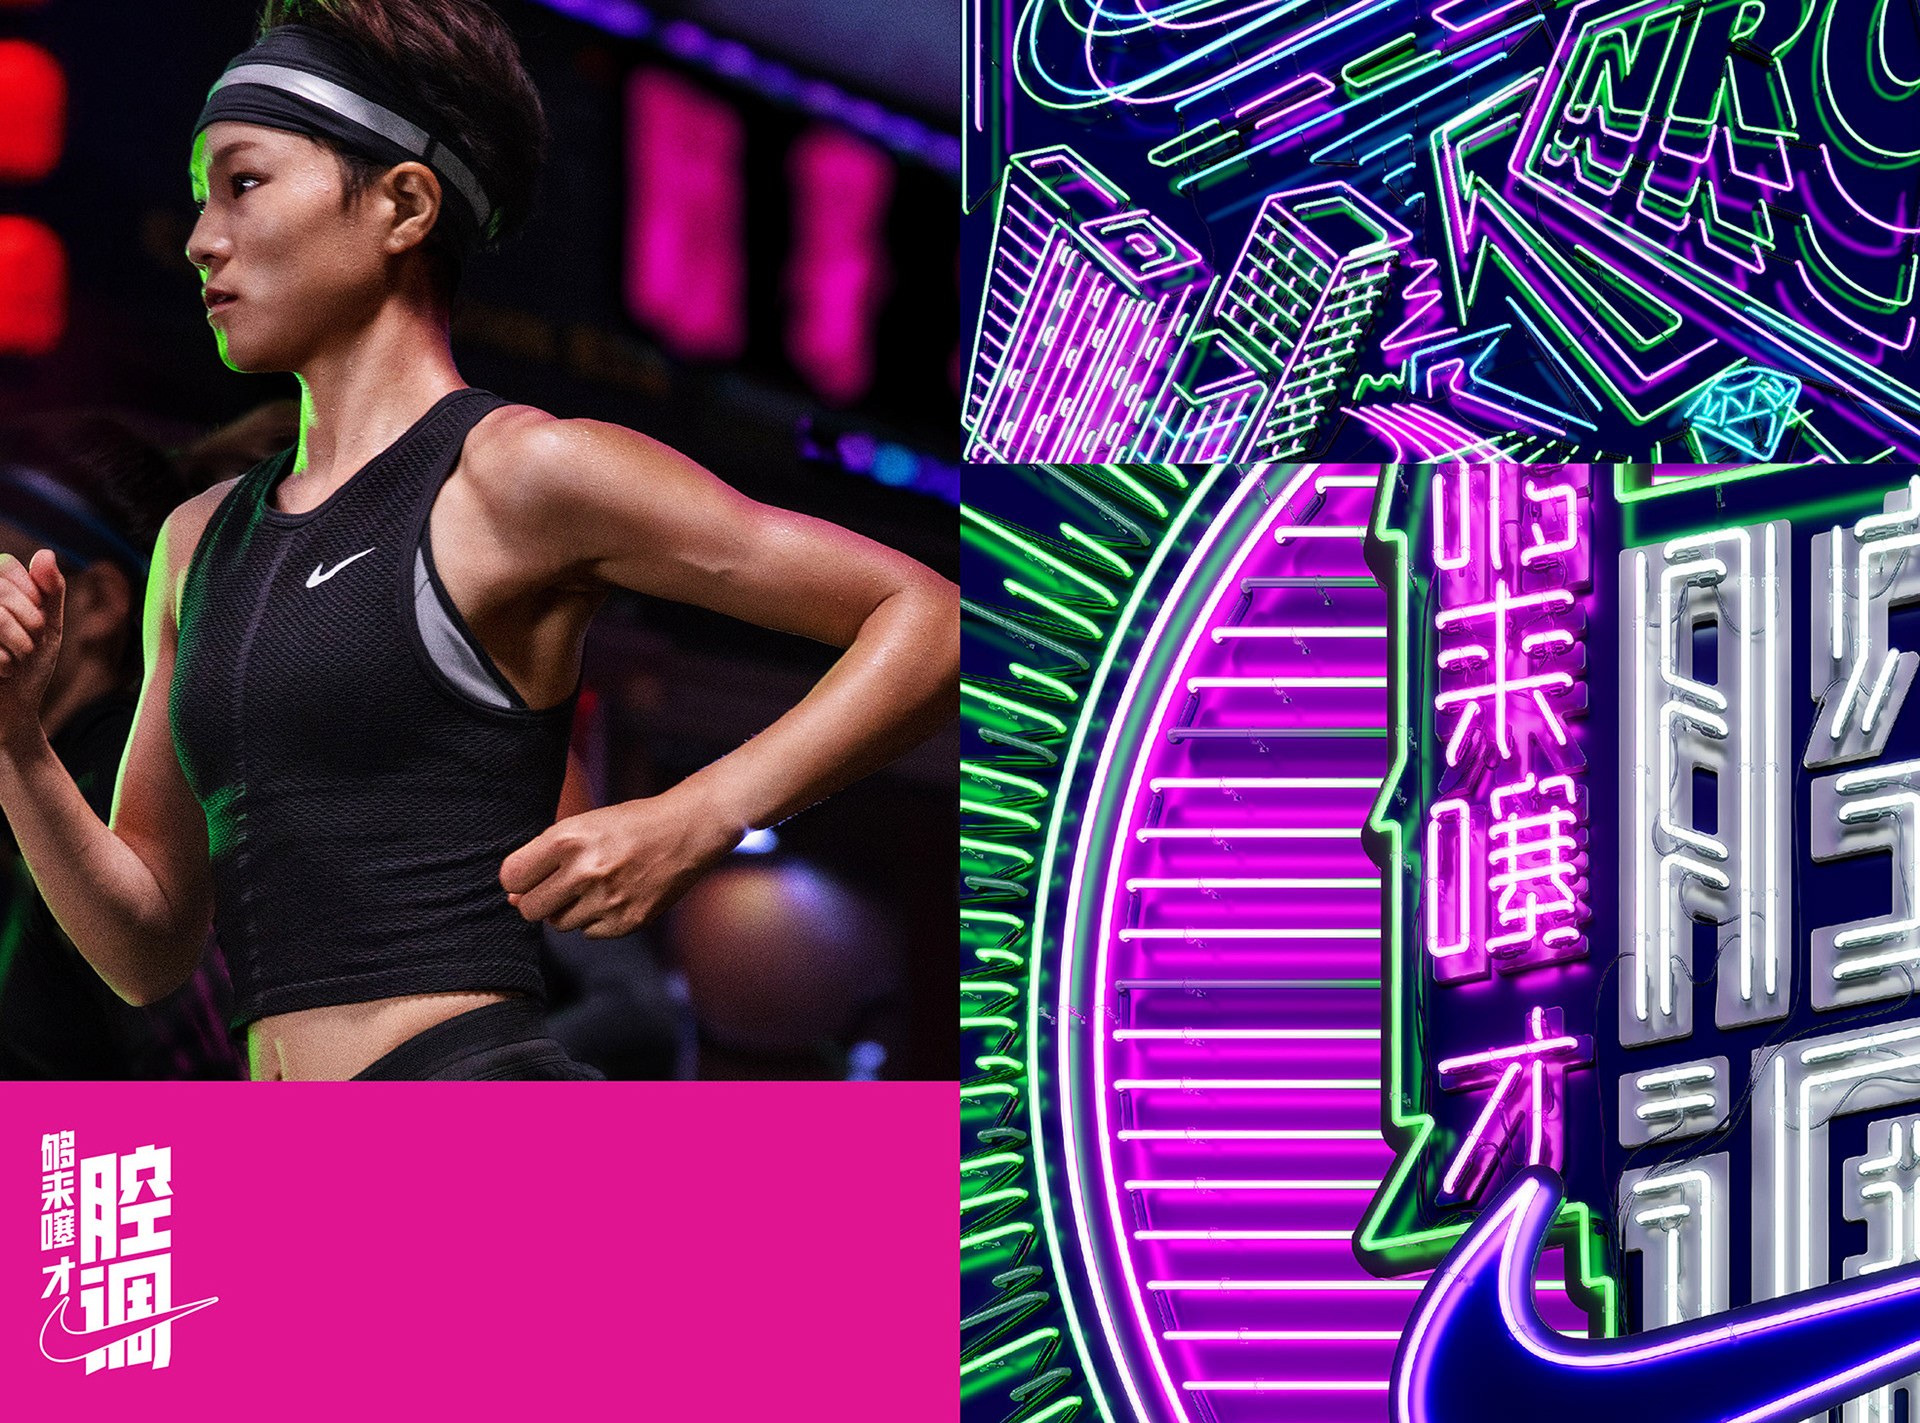 A set of key visuals for Nike Shanghai